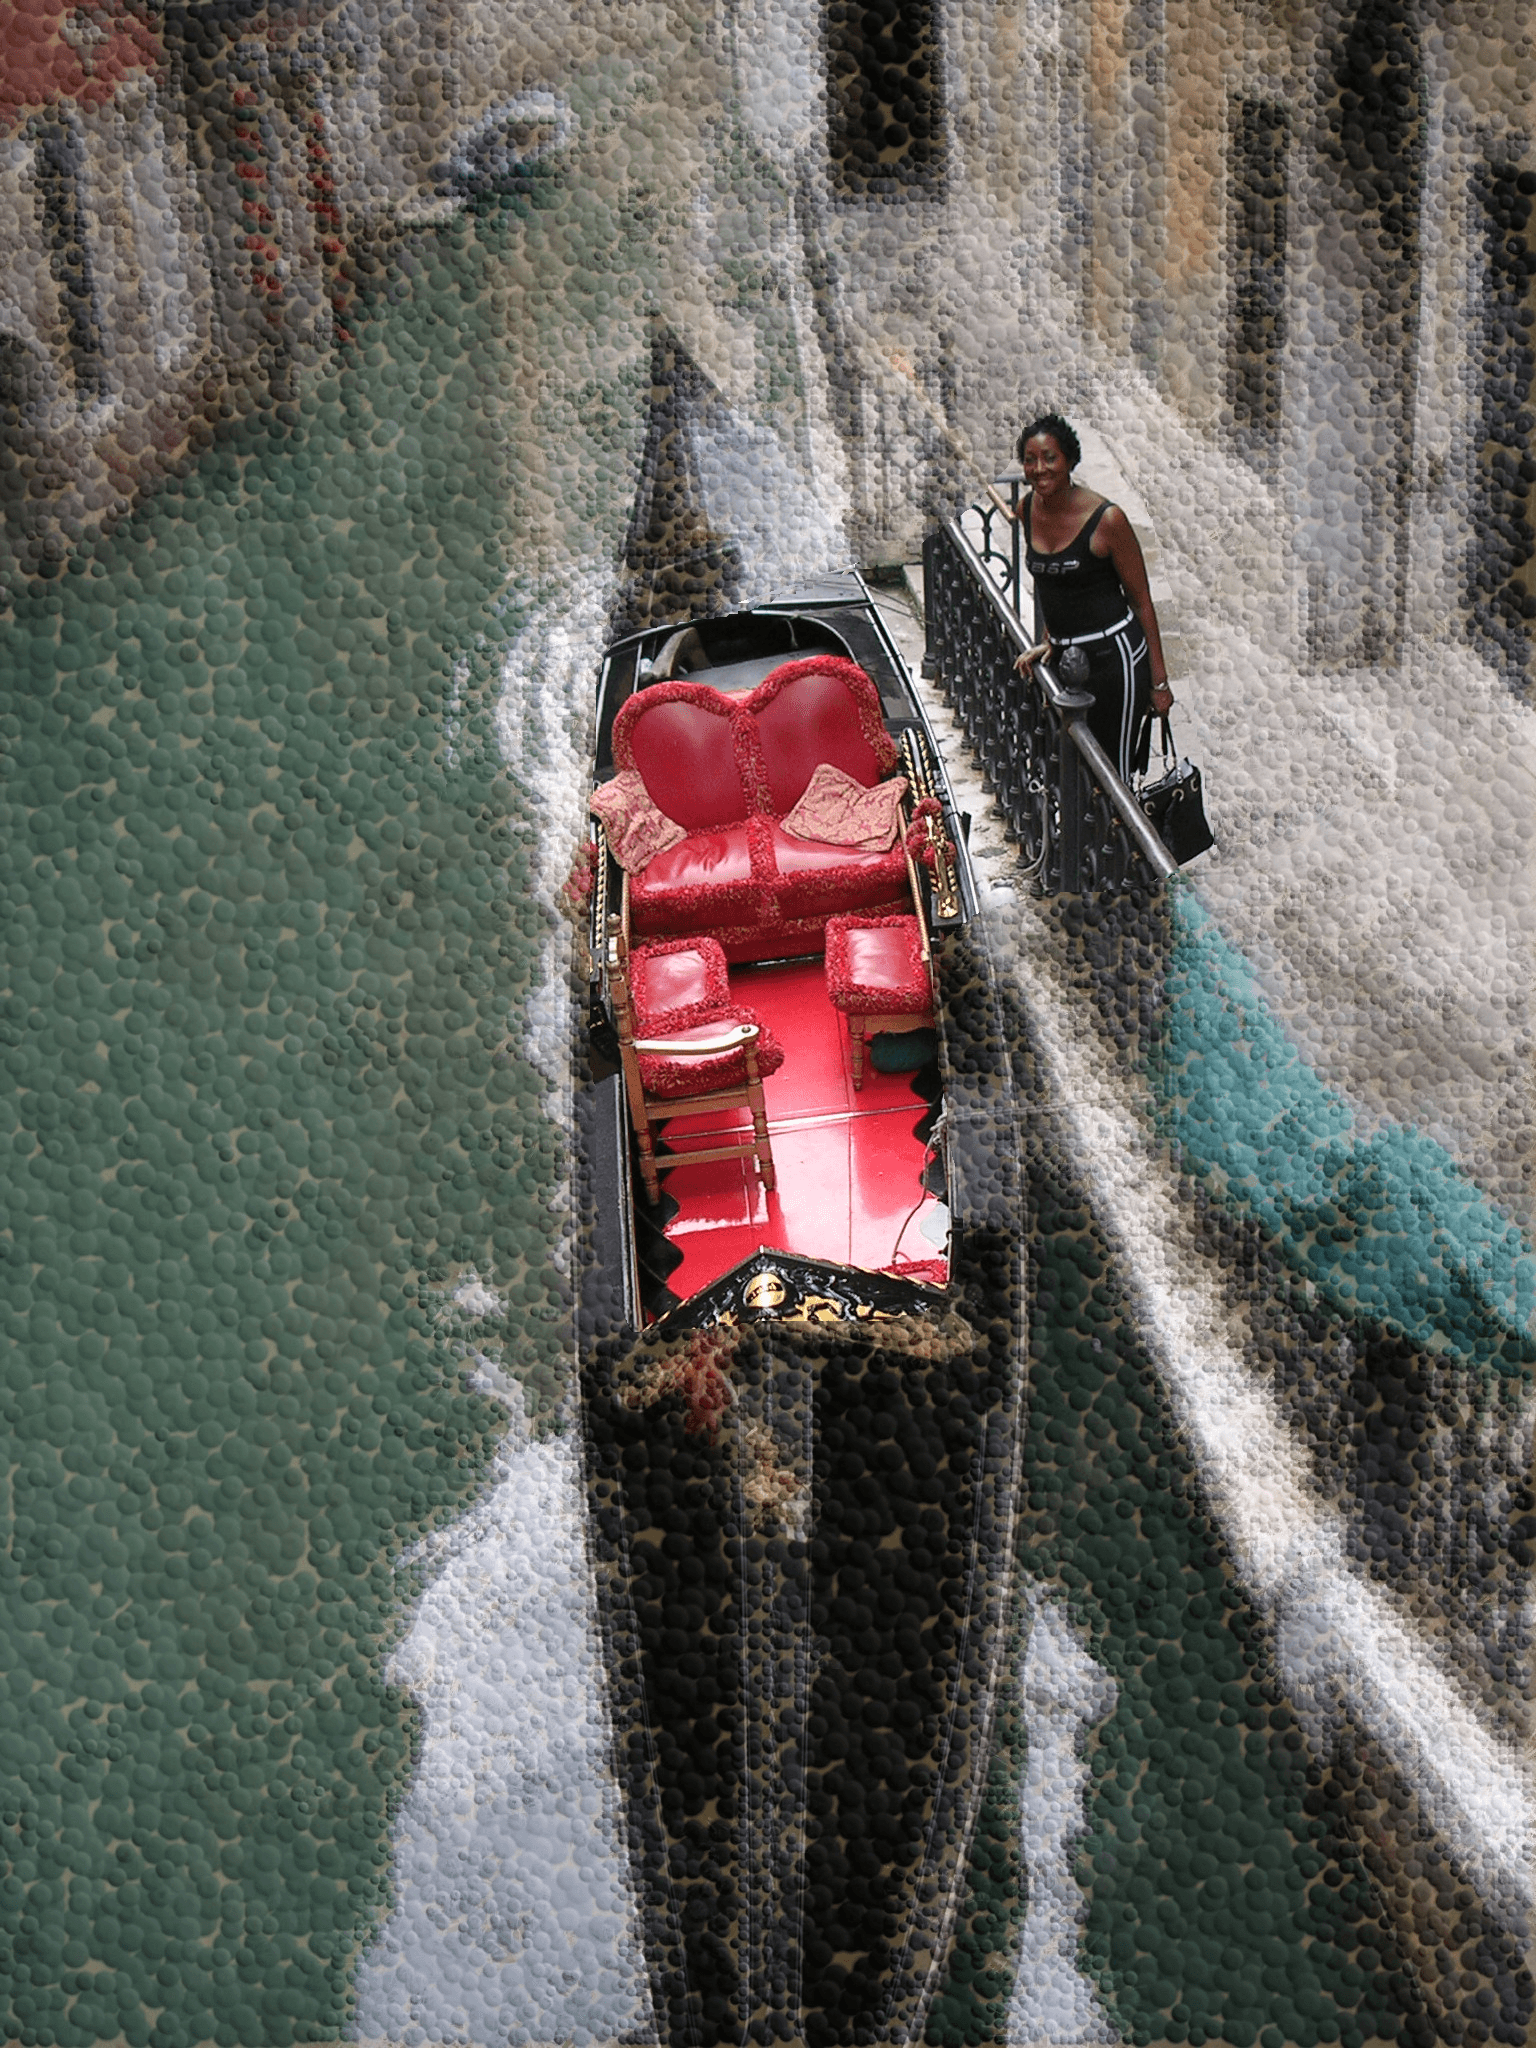 Venice-Canal-4-Gondolier                                                                           